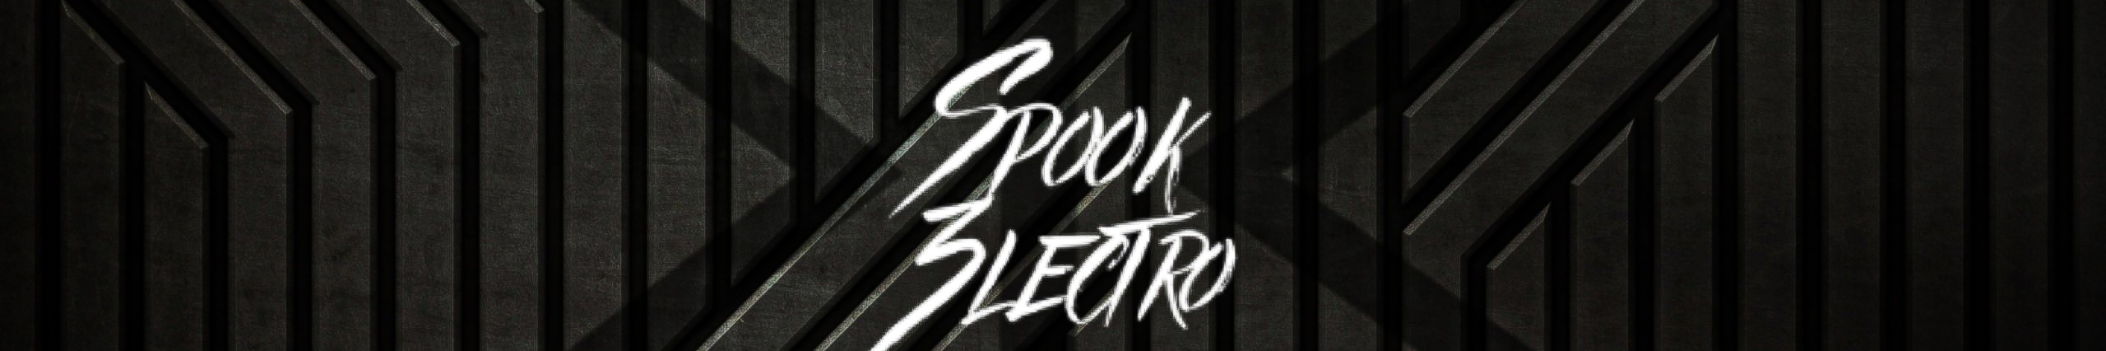 Spookelectro